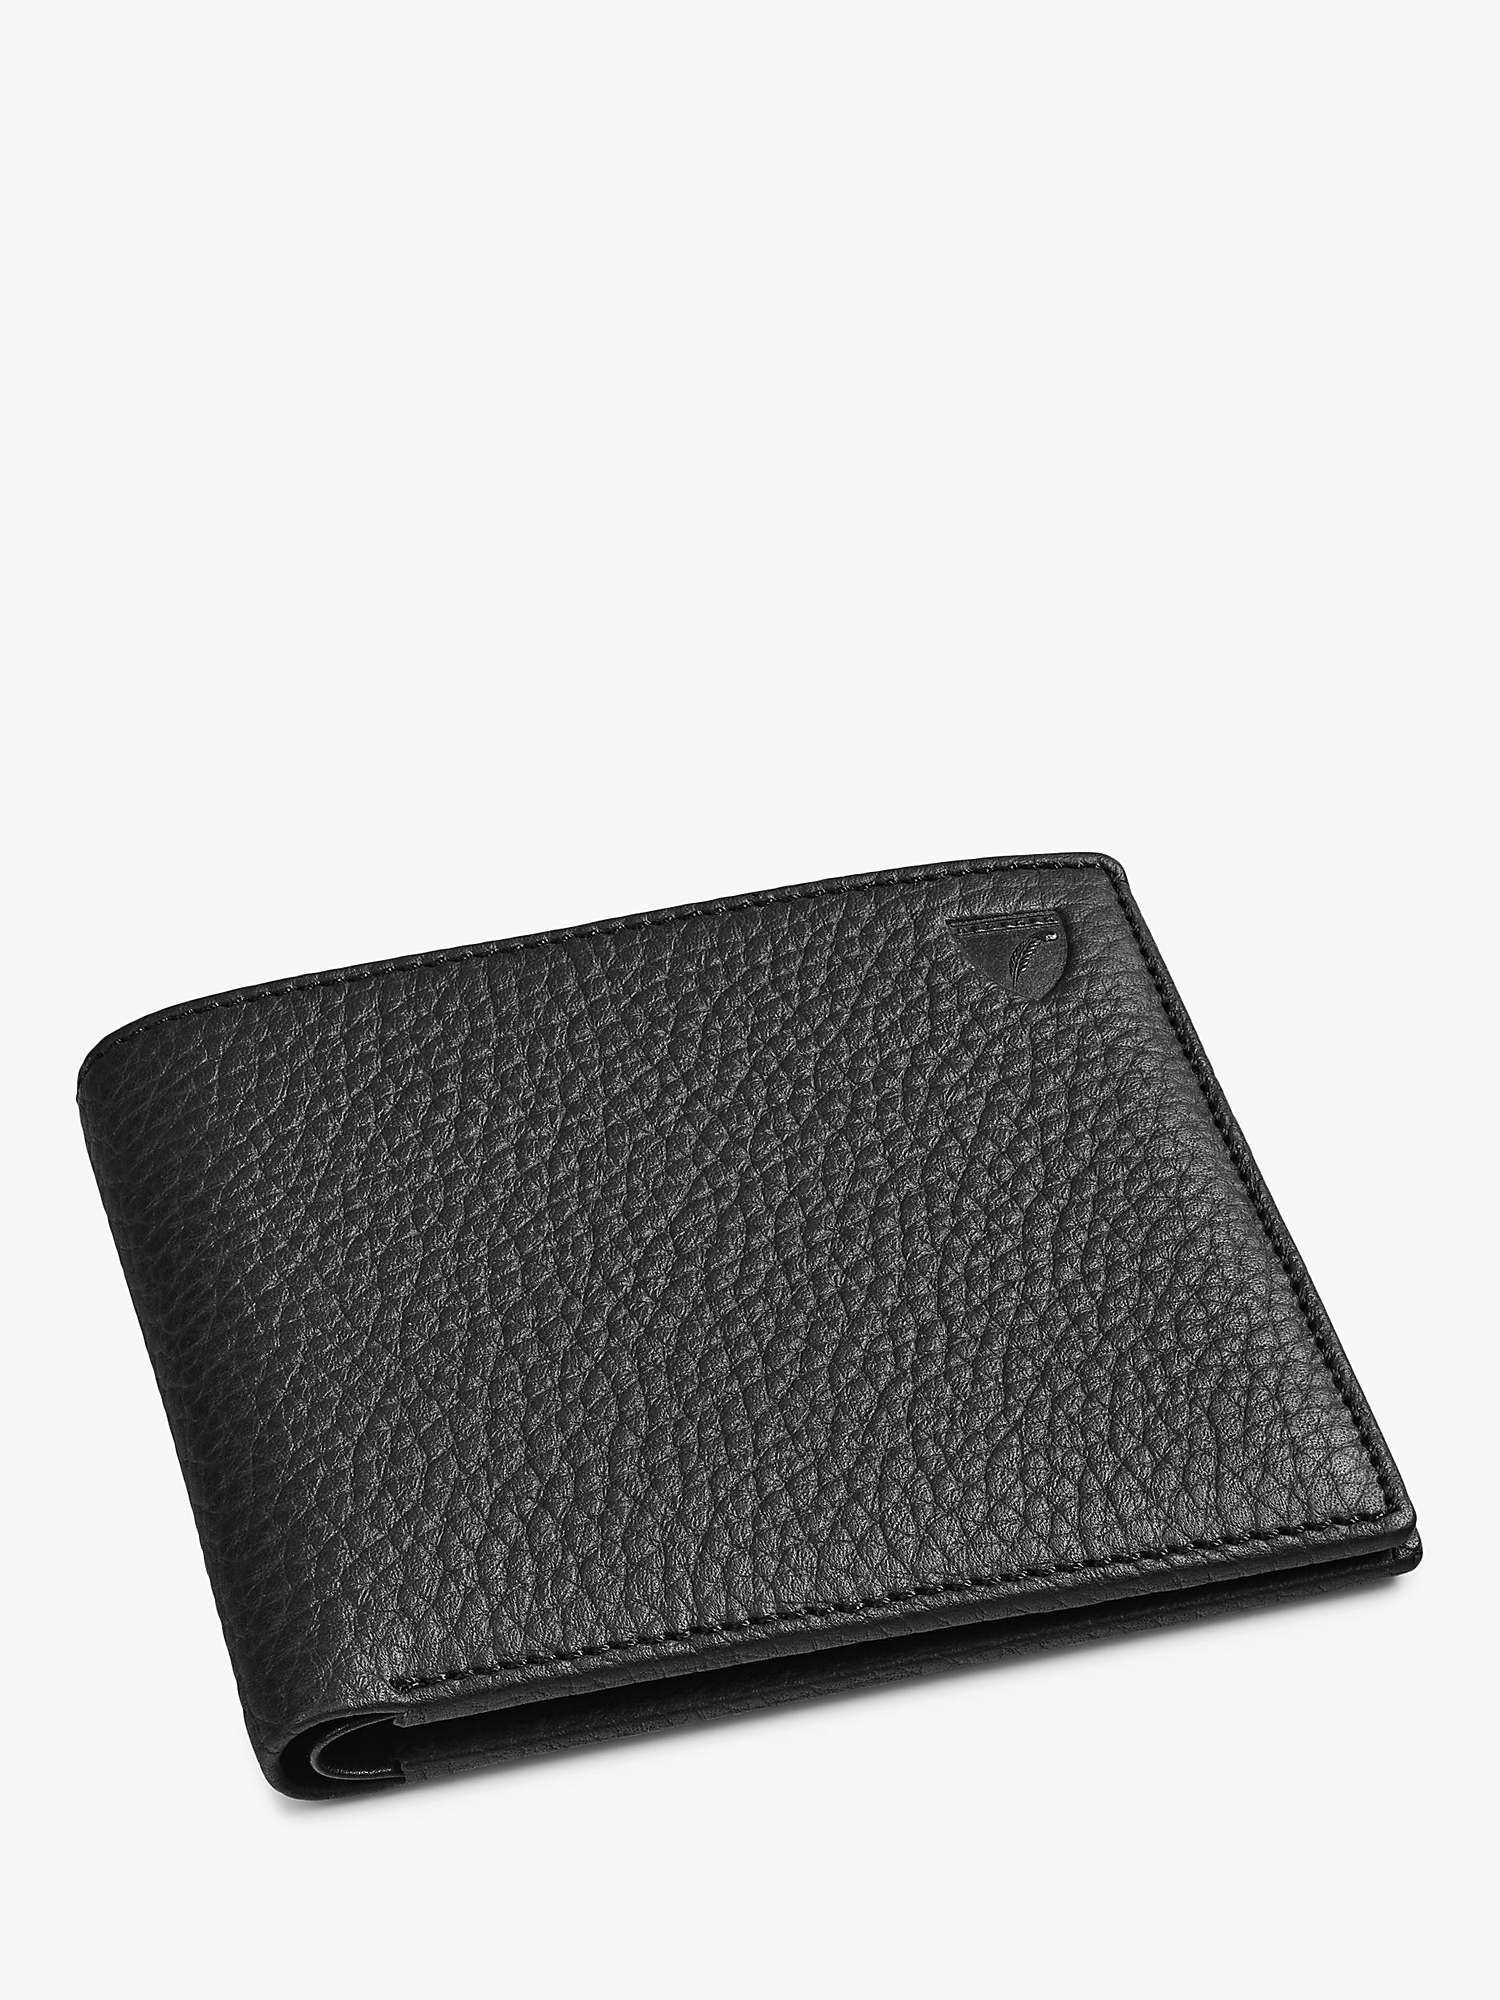 Buy Aspinal of London 8 Card Billfold Pebble Leather Billfold Wallet Online at johnlewis.com